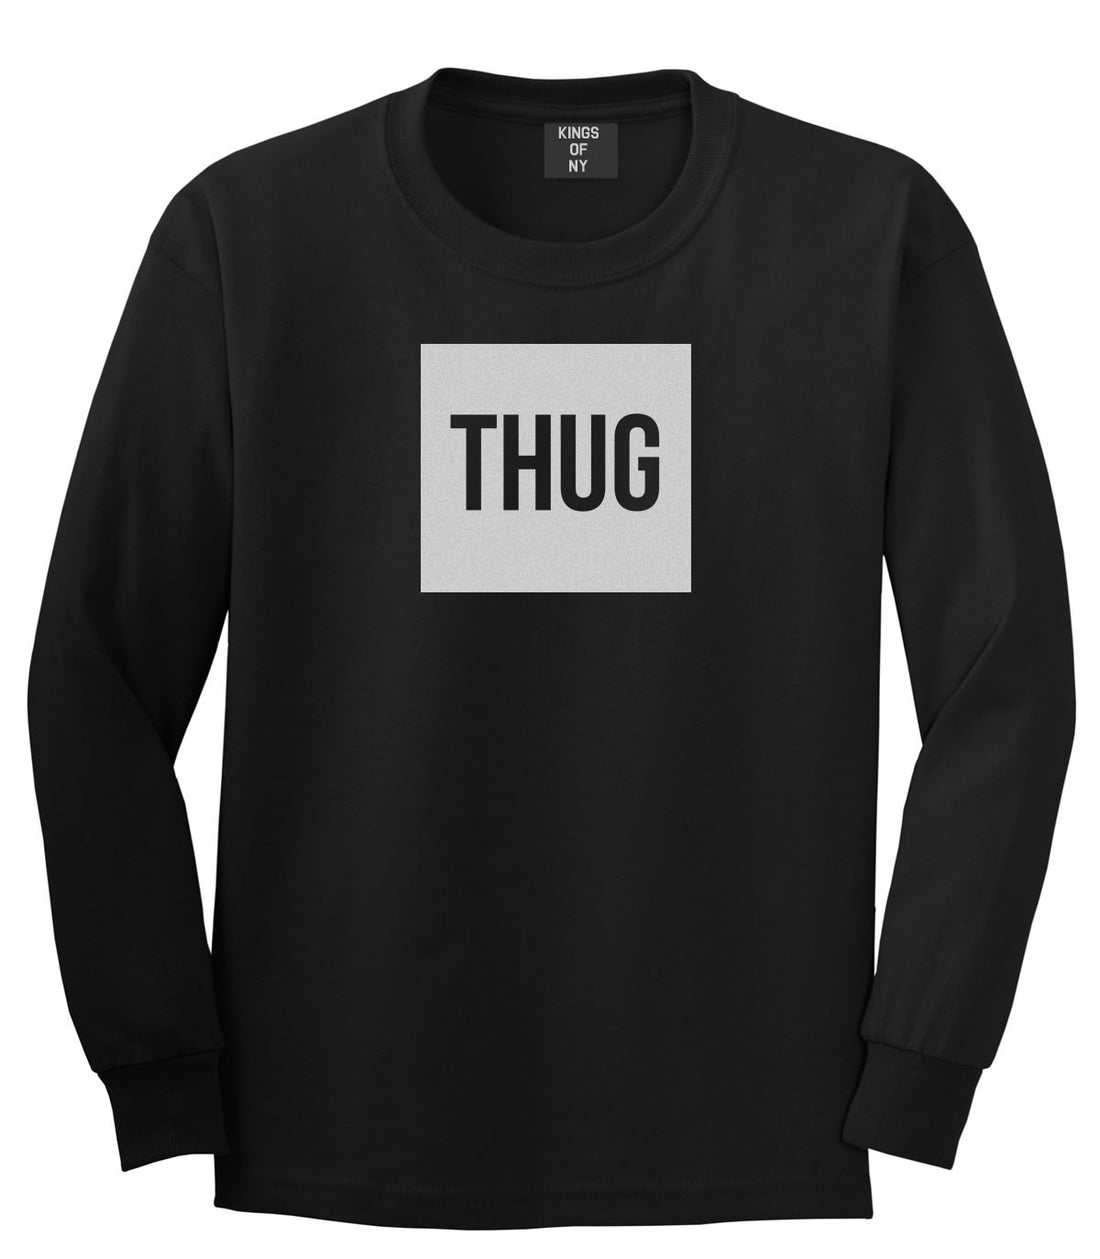 Thug Gangsta Box Logo Boys Kids Long Sleeve T-Shirt in Black by Kings Of NY